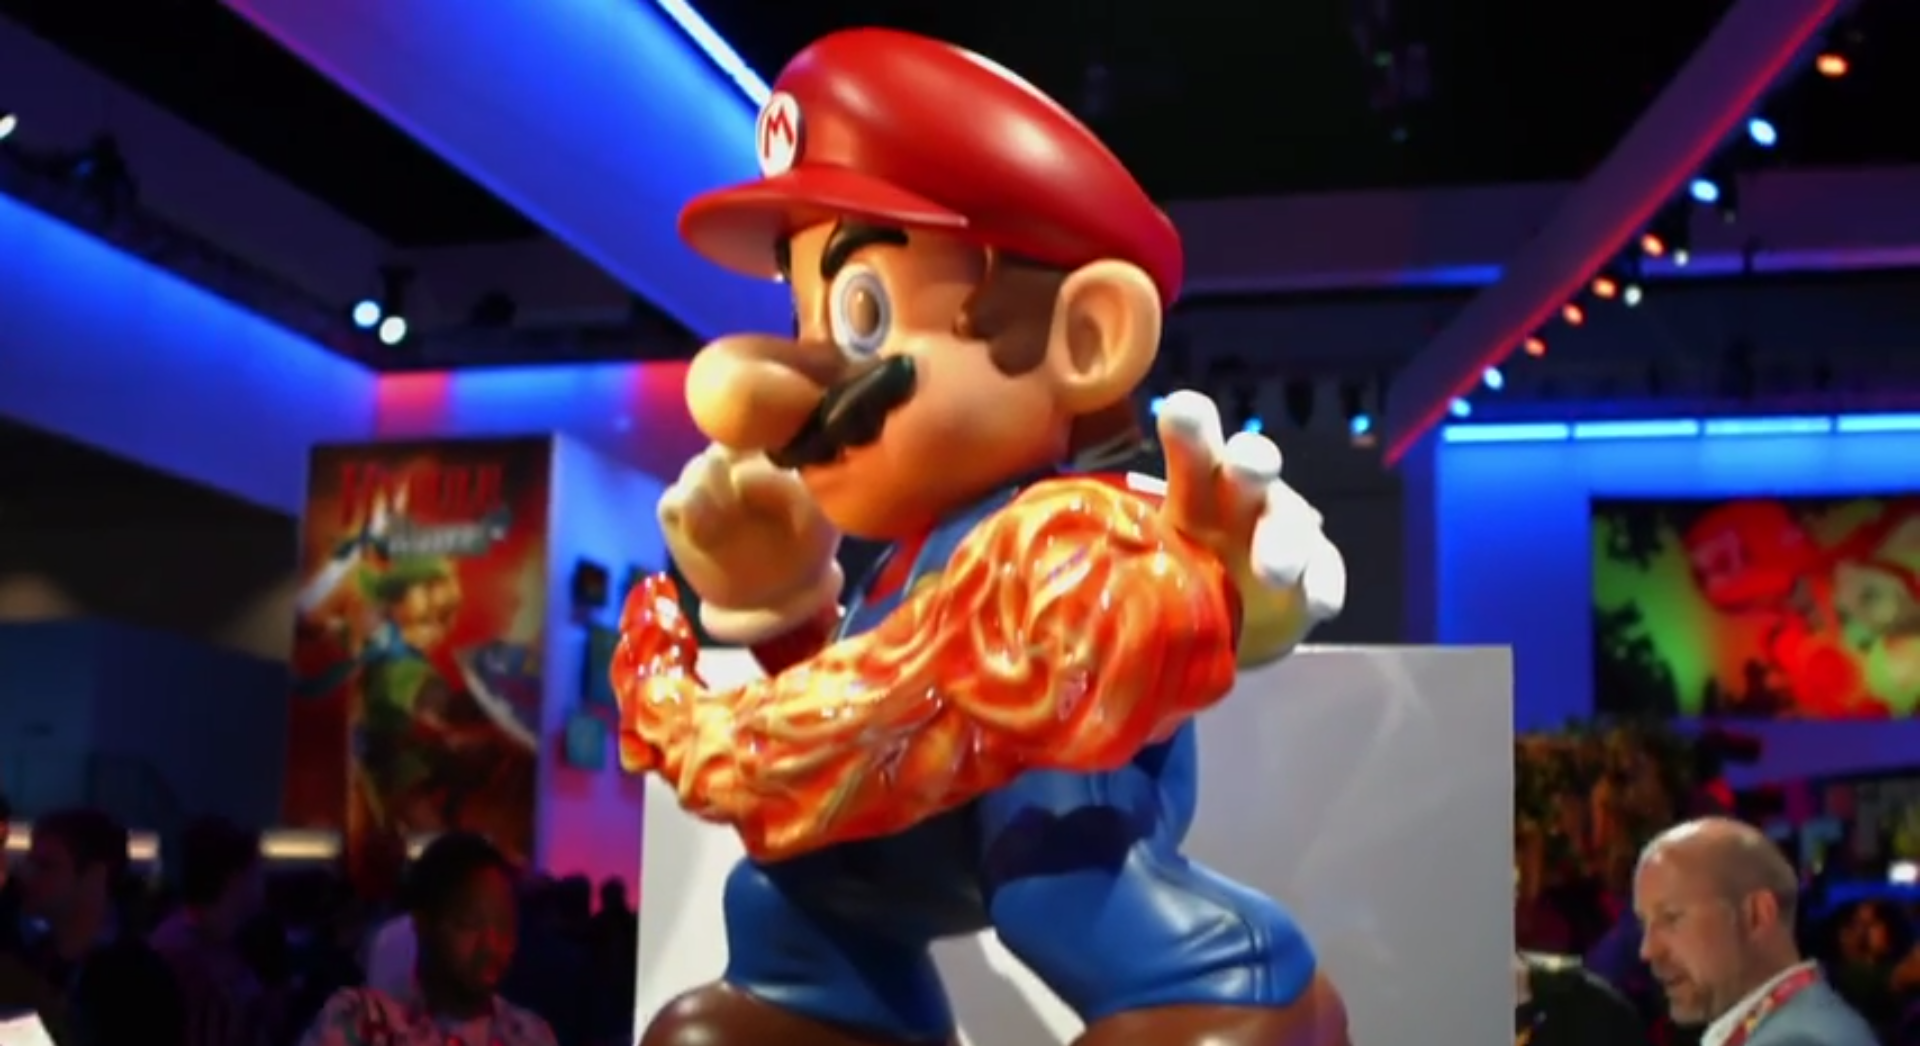 Purely Opinion: How Nintendo ‘Won’ E3 2014